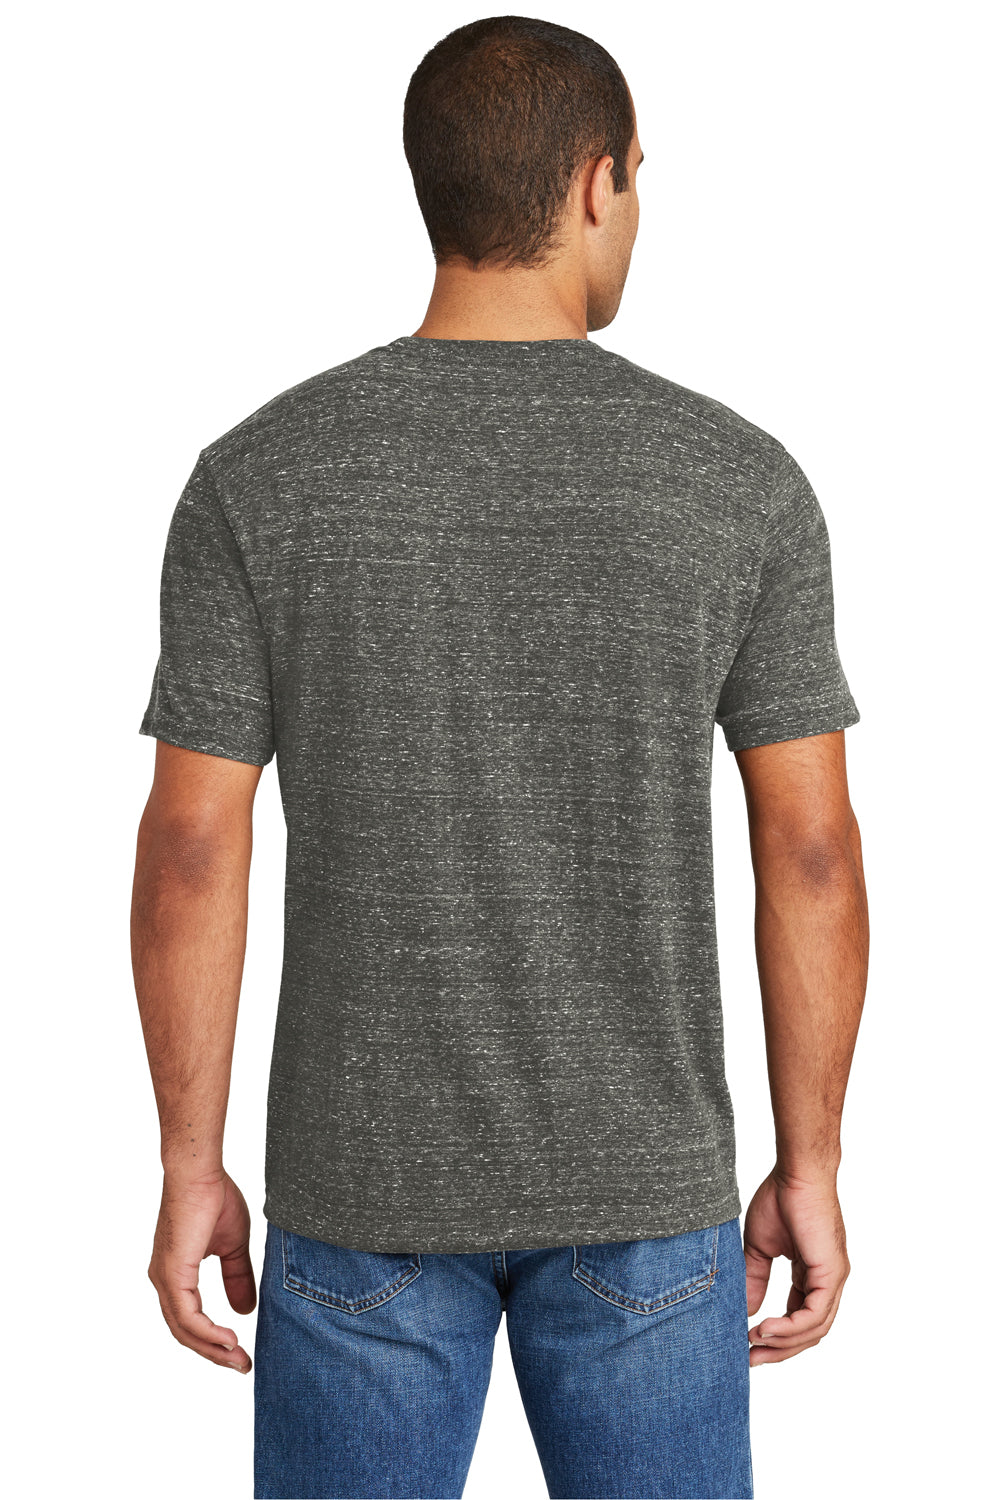 District DT365 Mens Cosmic Short Sleeve Crewneck T-Shirt Black/Grey Back